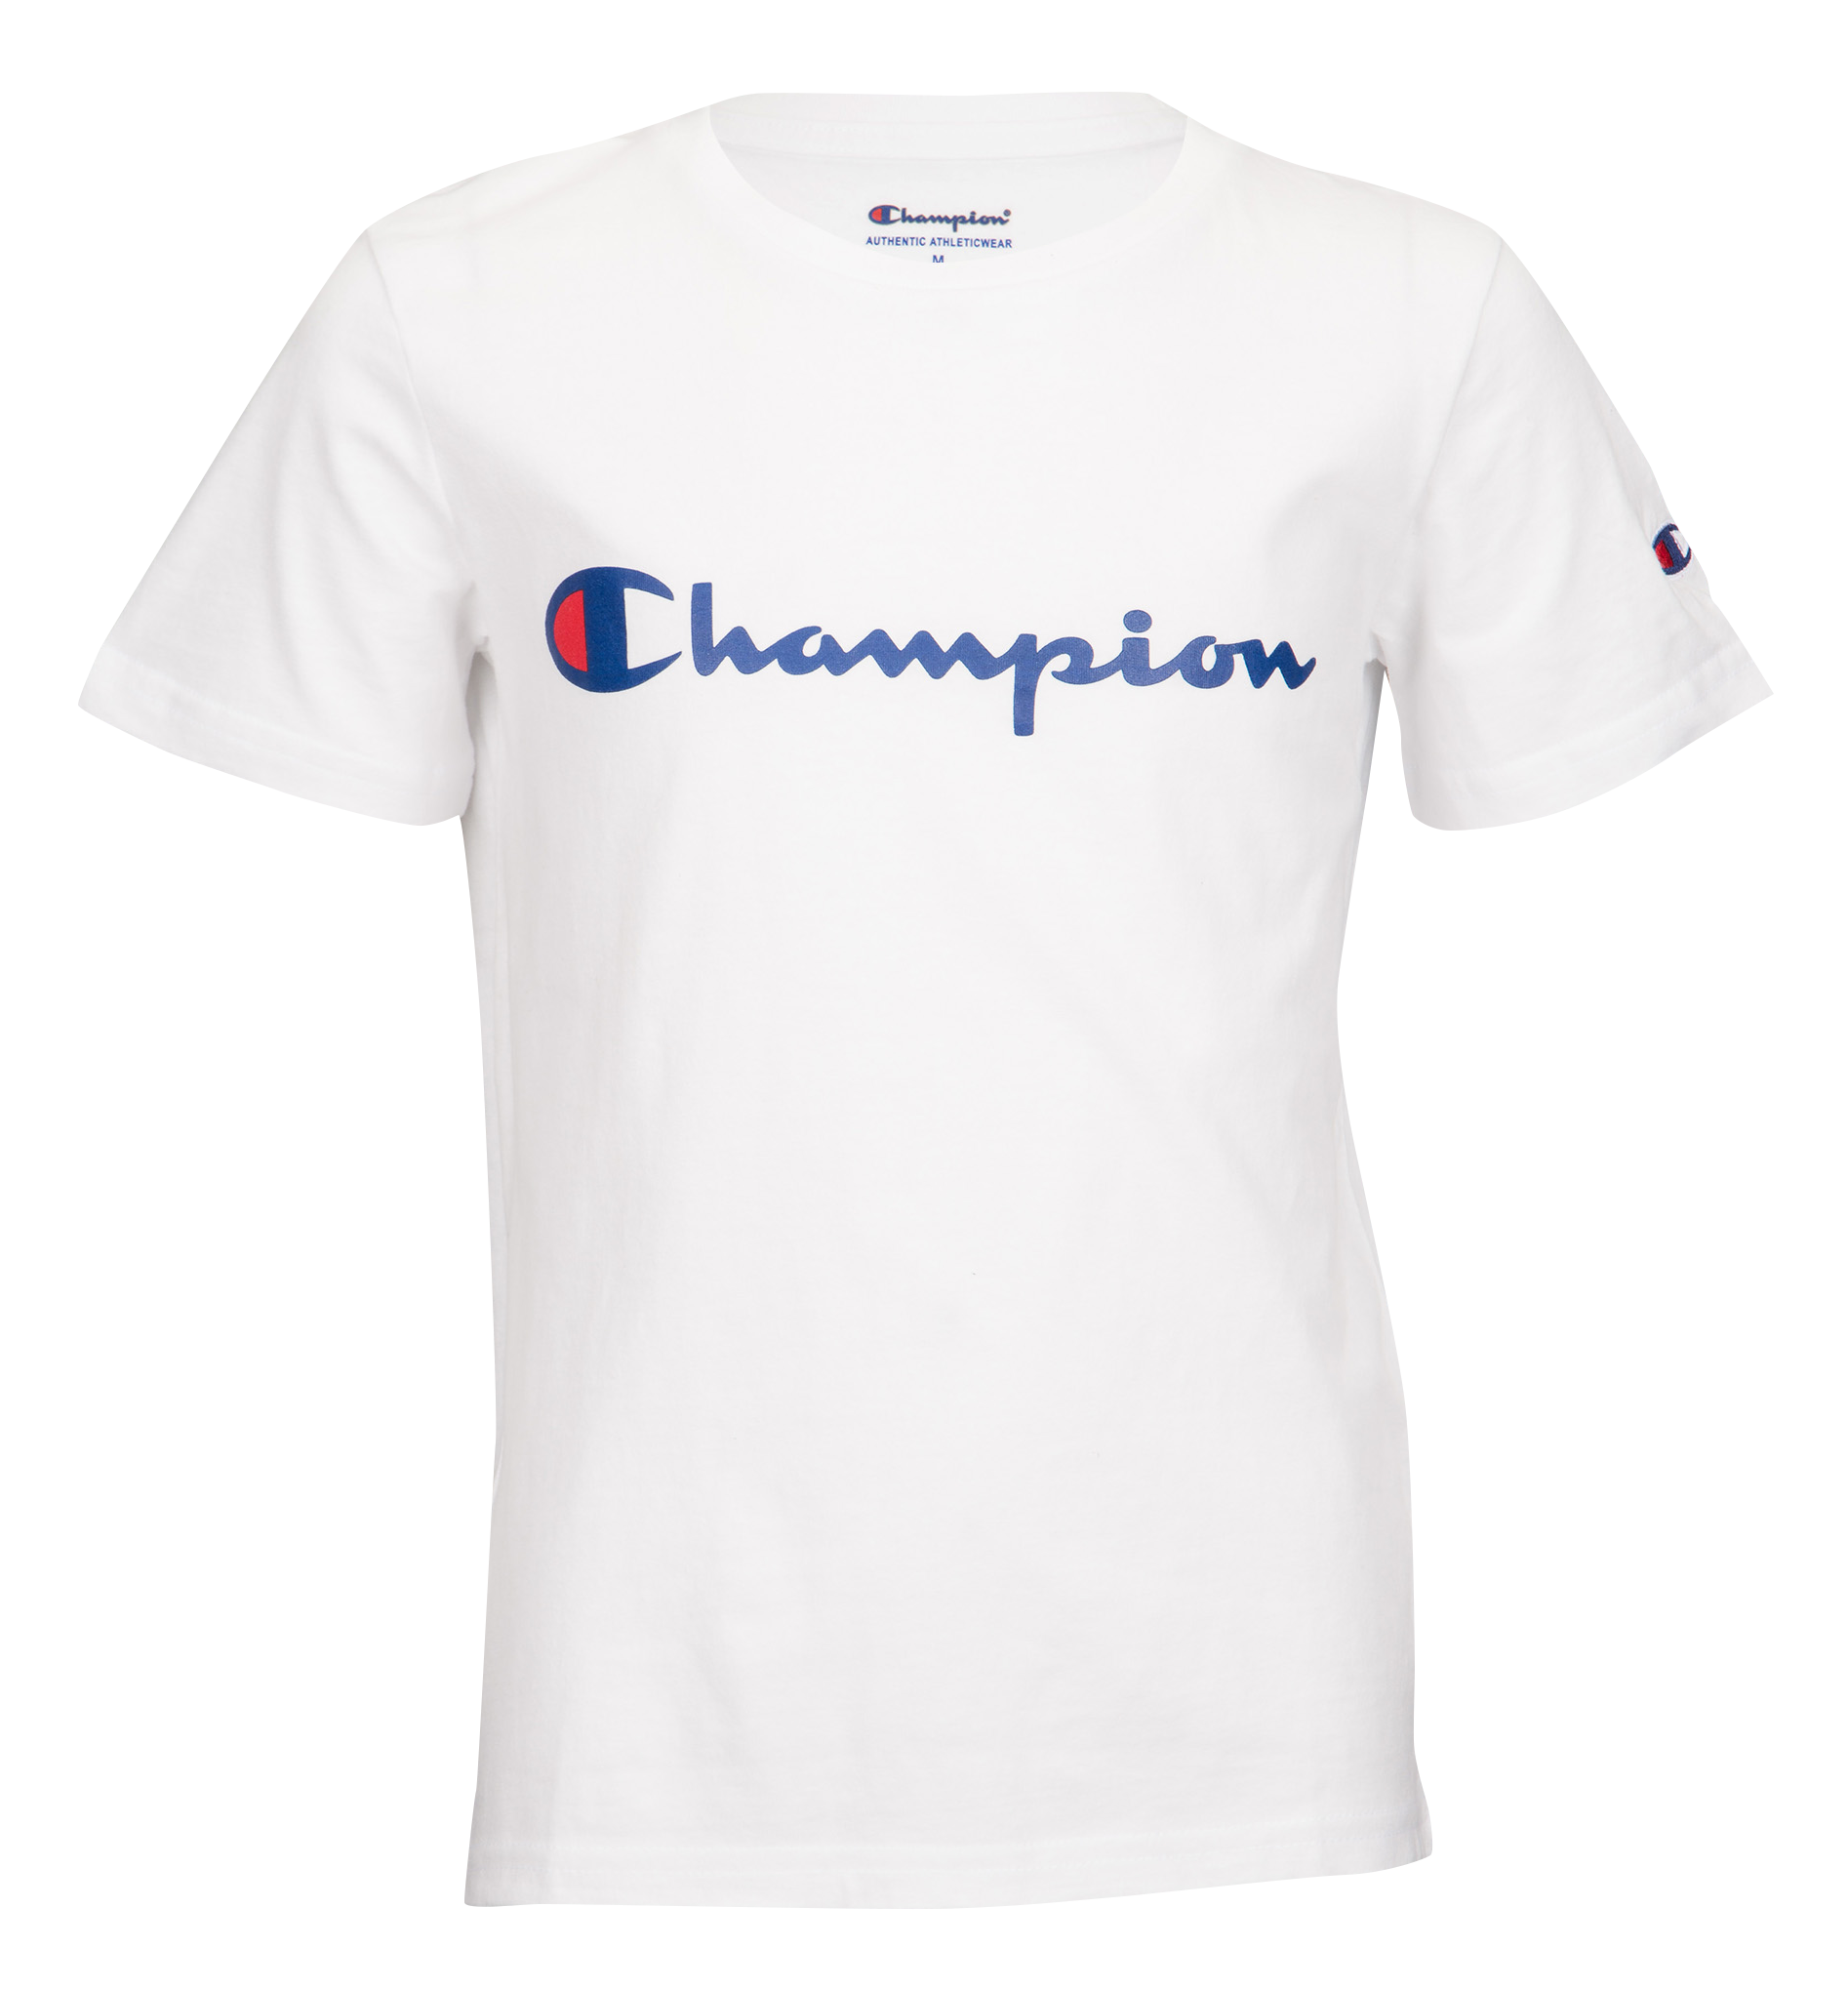 foot locker champion shirts